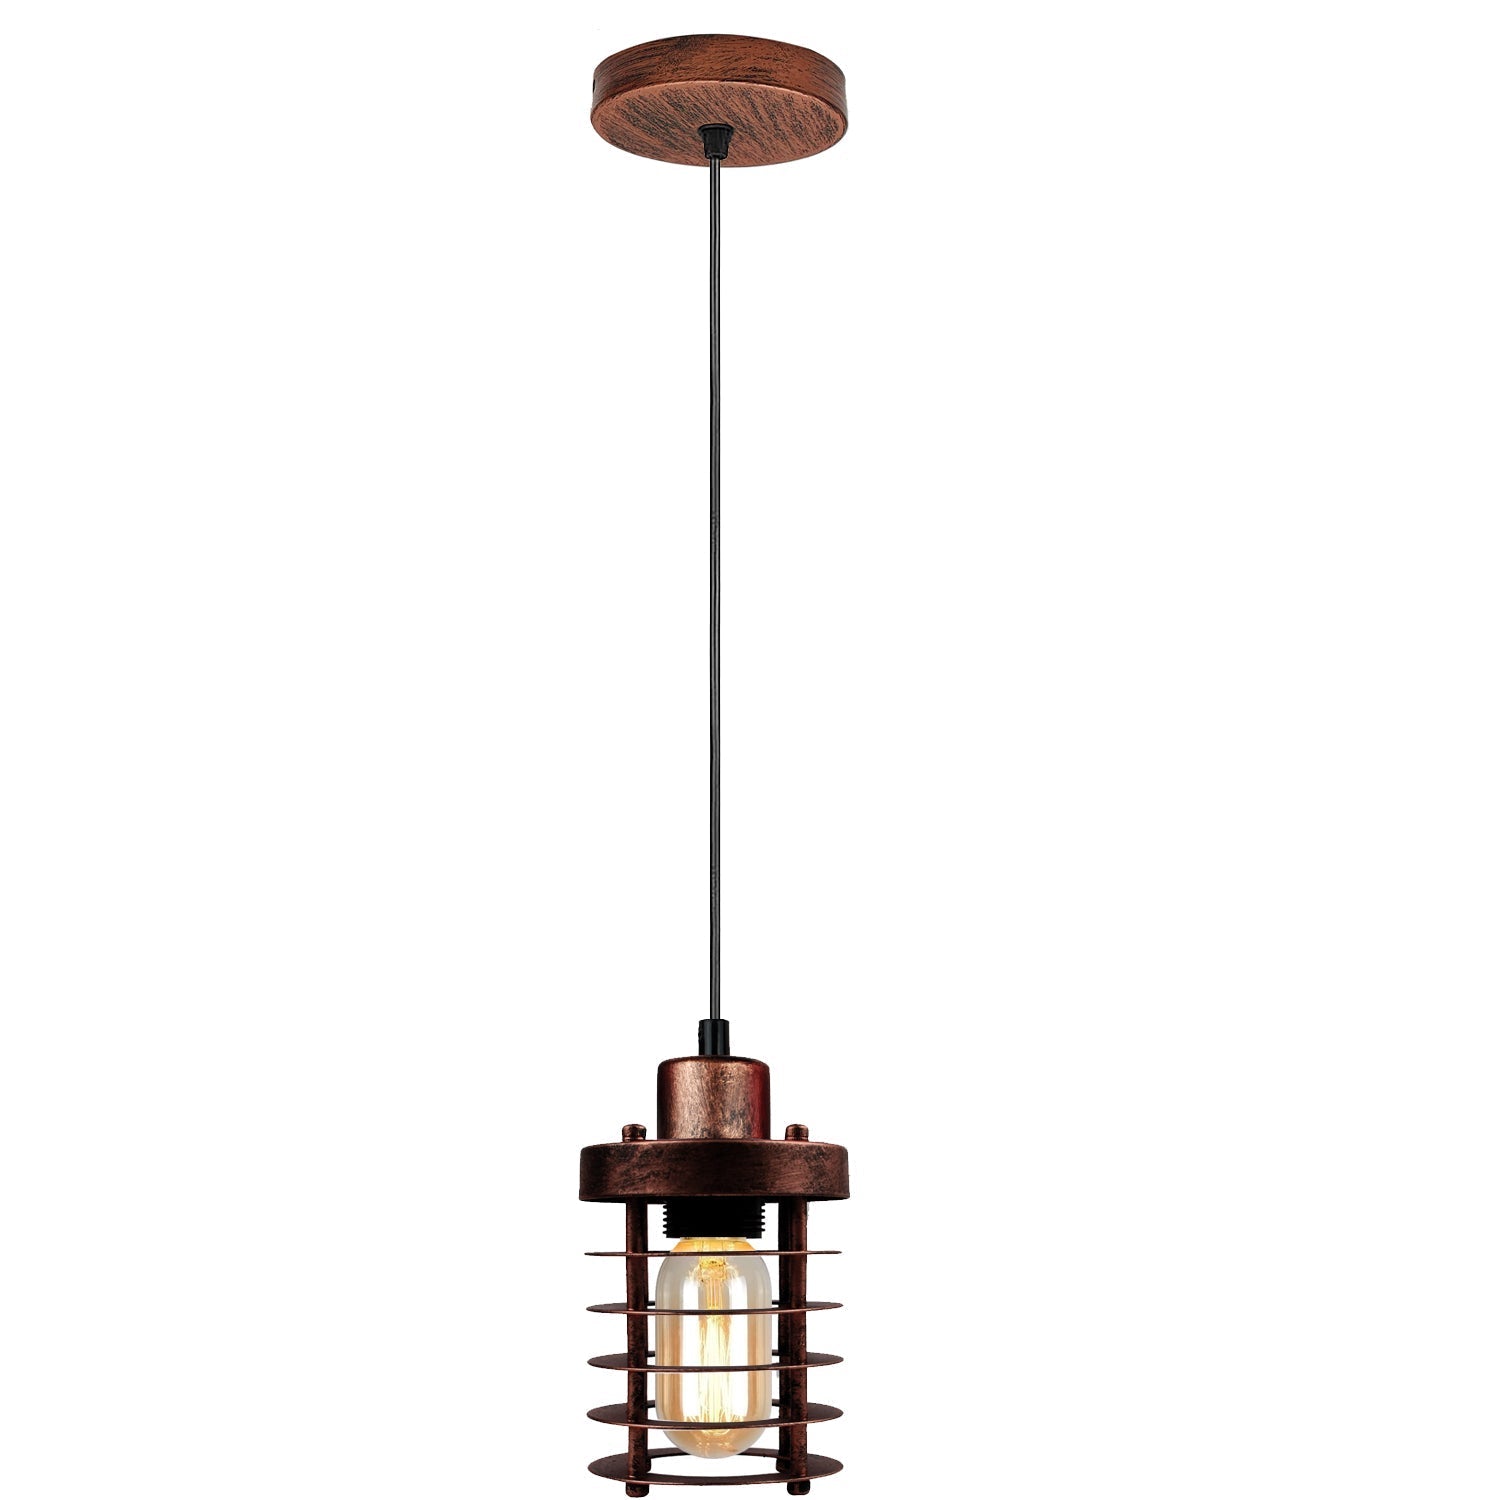 Vintage Pendant Lights Industrial Metal Ceiling Hanging Lamp Shade Cage Pendant Light Adjustable for Indoor lighting